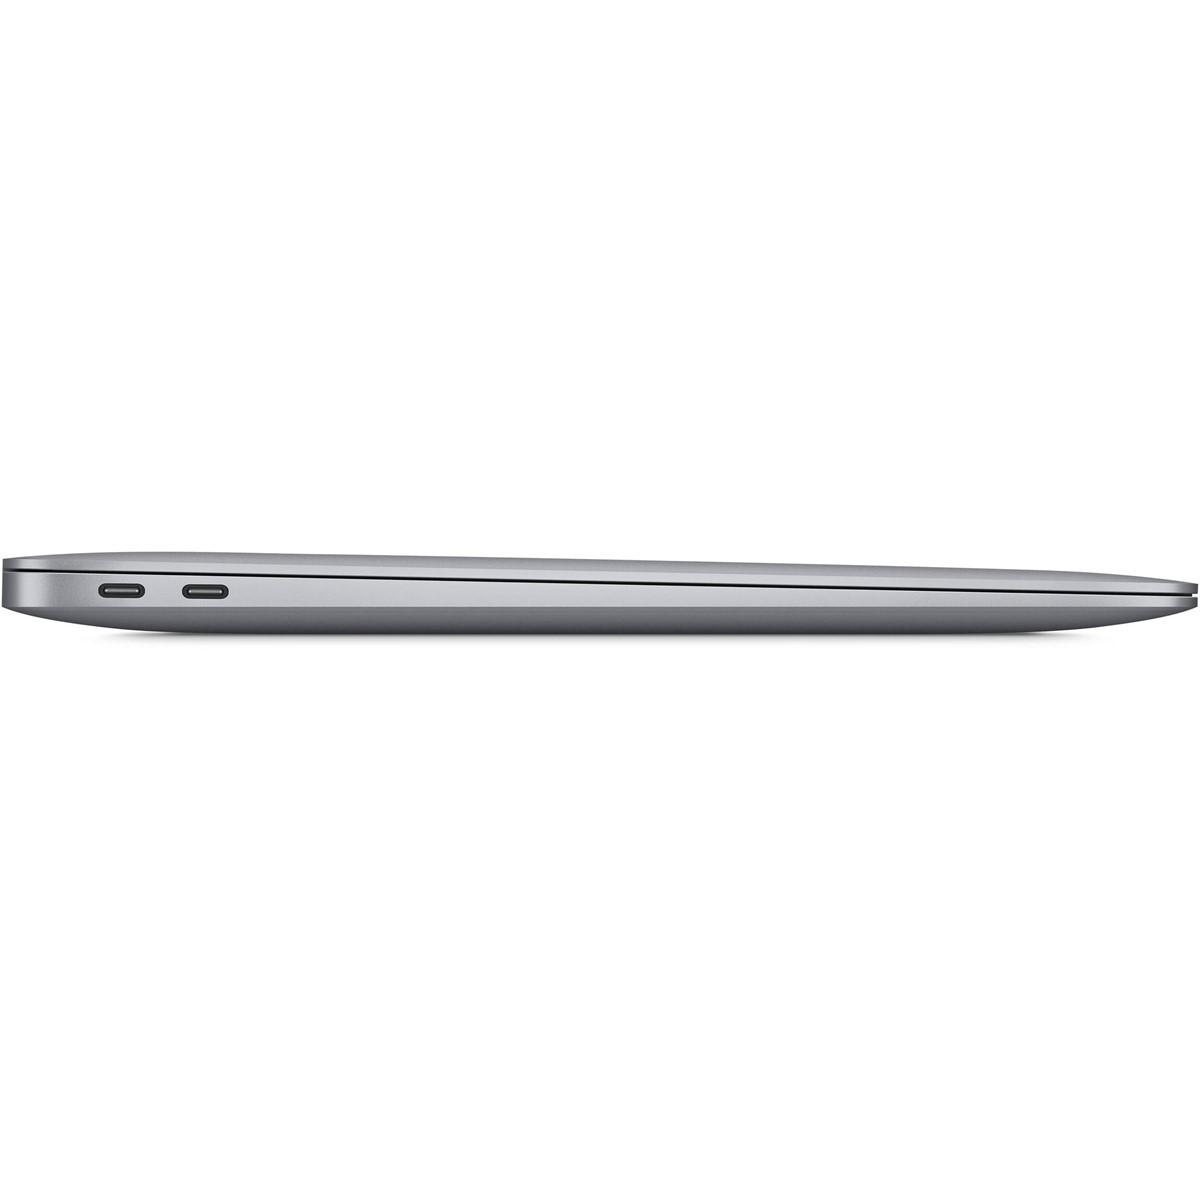 لپ تاپ 13 اینچی اپل مدل MacBook Air CTO 1TB M1 2020